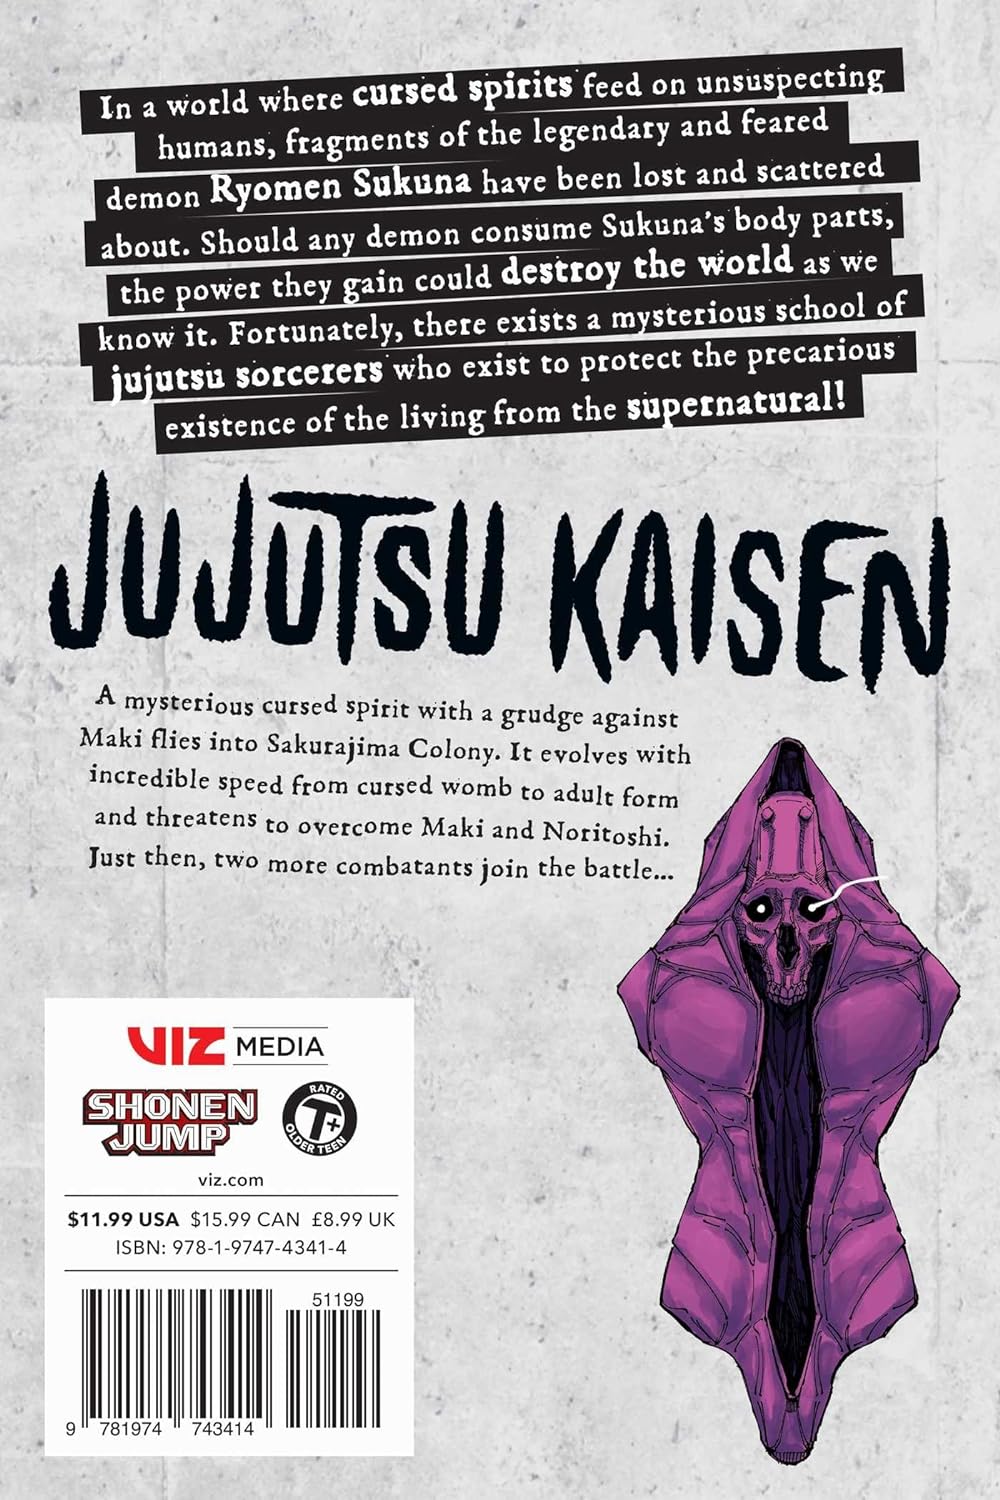 Jujutsu Kaisen vol. 22 Panini Manga UNBOXING 